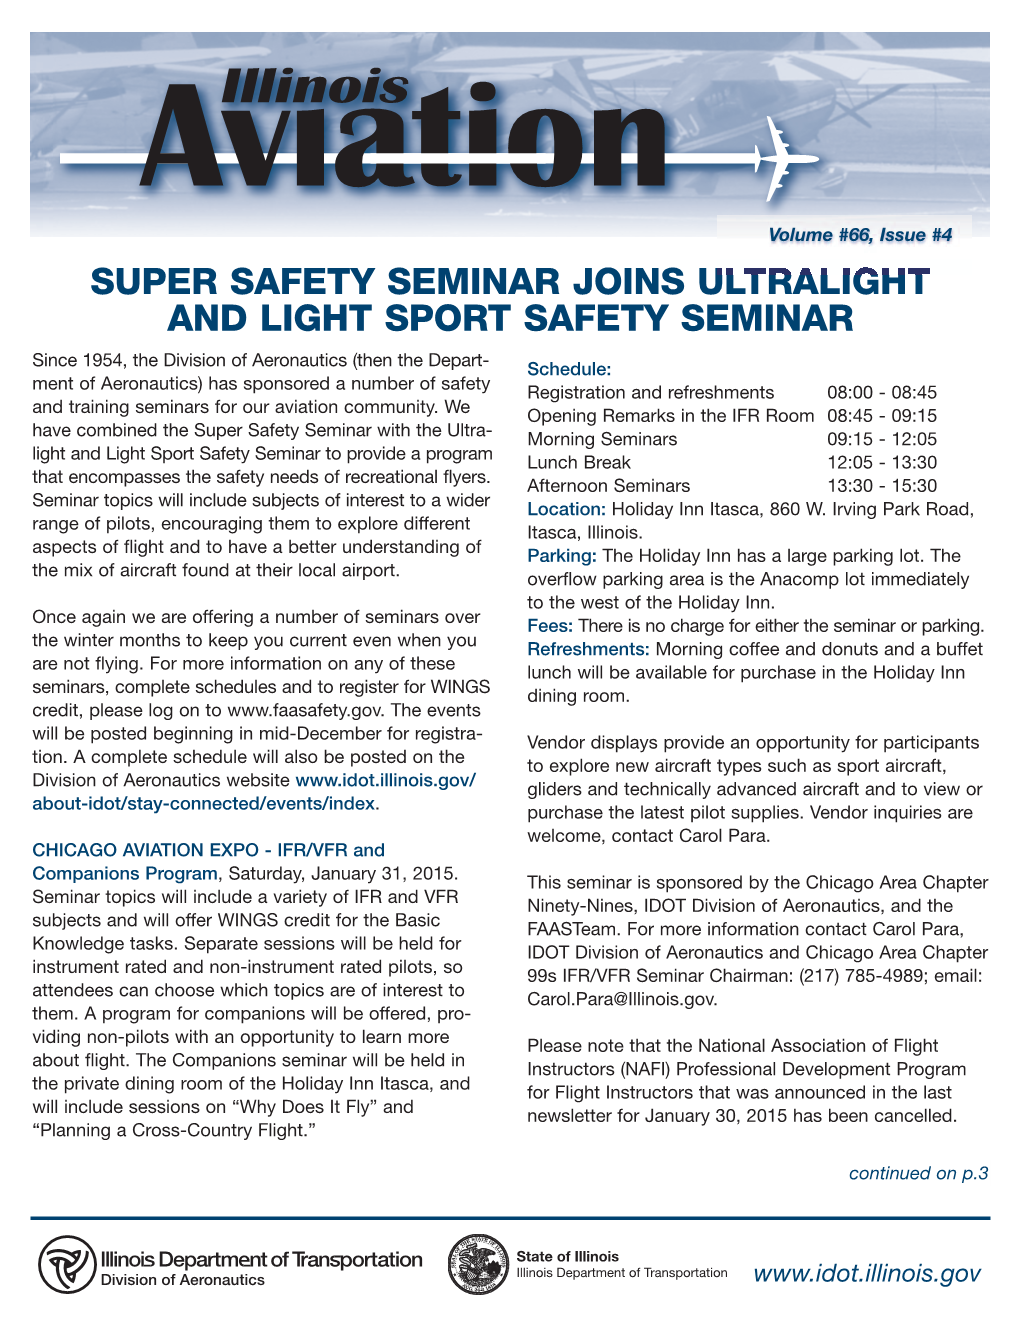 Super Safety Seminar Joins Ultralight and Light Sport